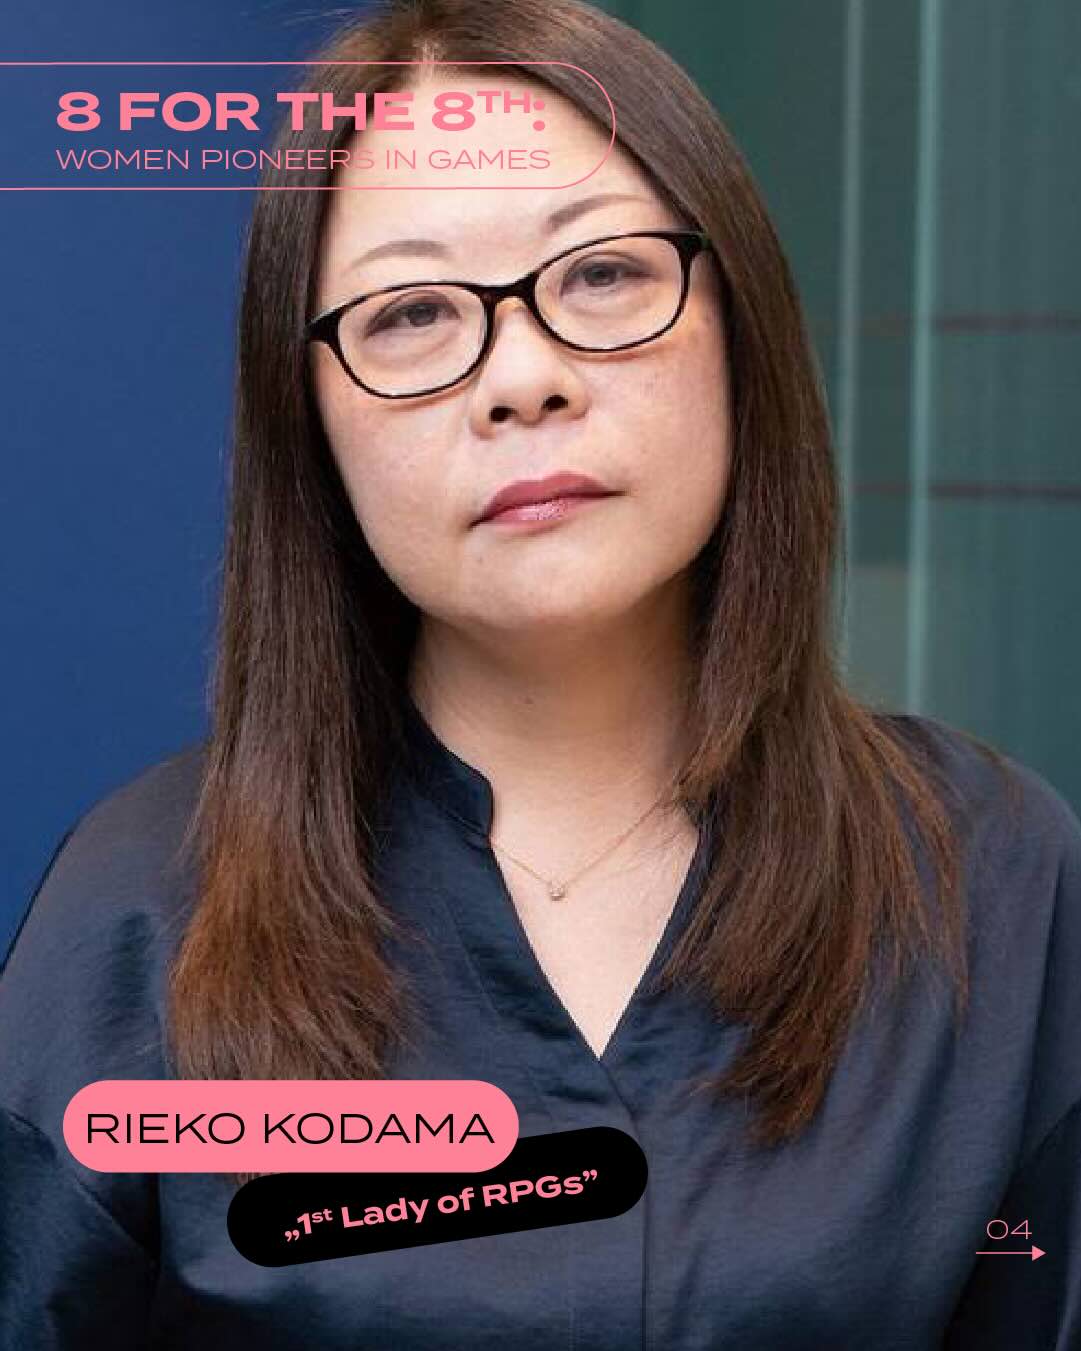 Rieko Kodama, Sega's First Lady of RPGs